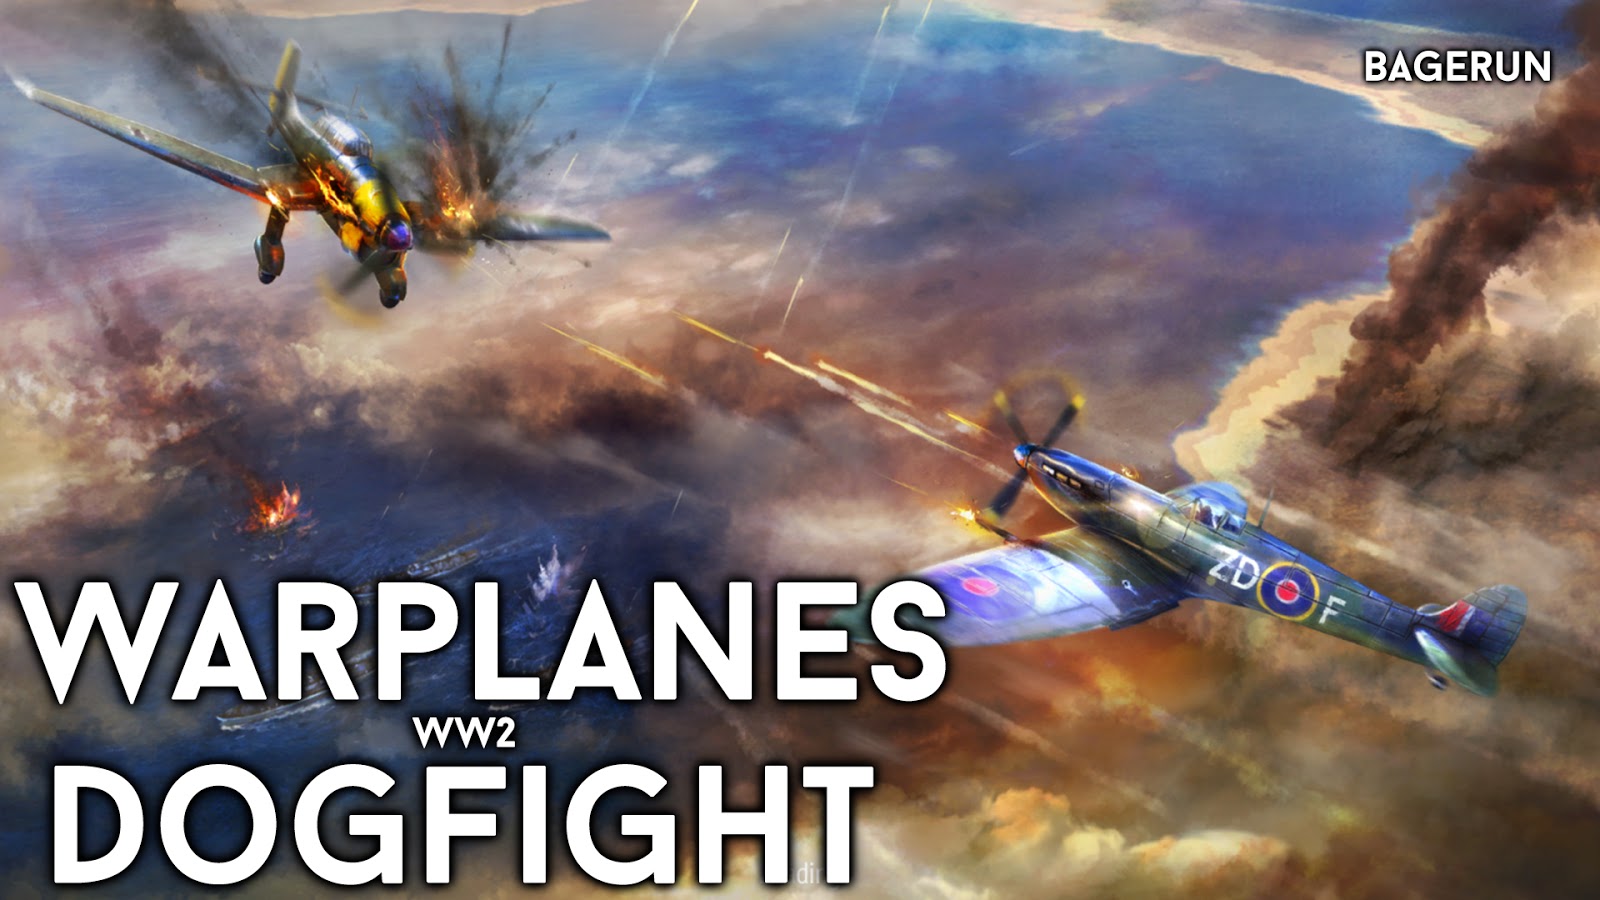 Игра warplanes ww2 dogfight. Игра Dogfight 2. World of warplanes ww2 Dogfight. Warplanes ww2 Dogfight мод.